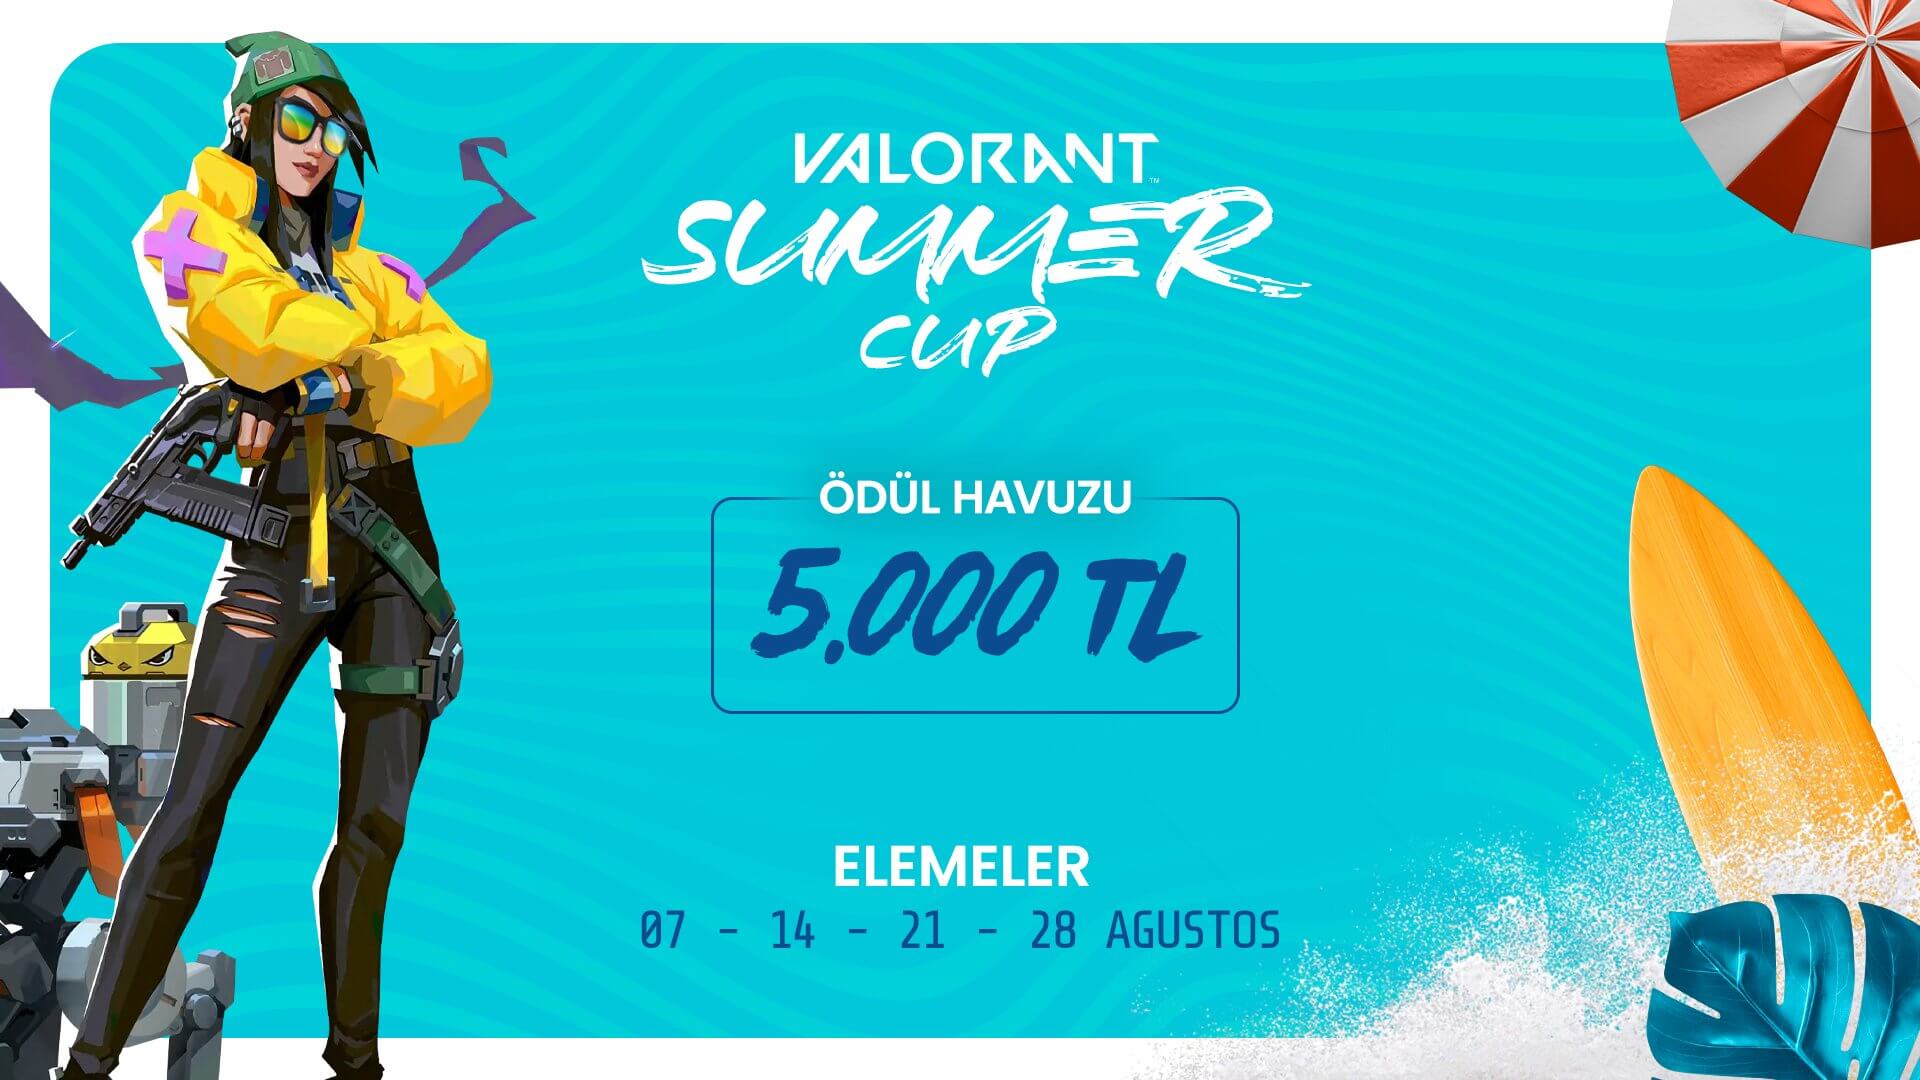 Elowell Summer Cup VALORANT turnuvası duyuruldu